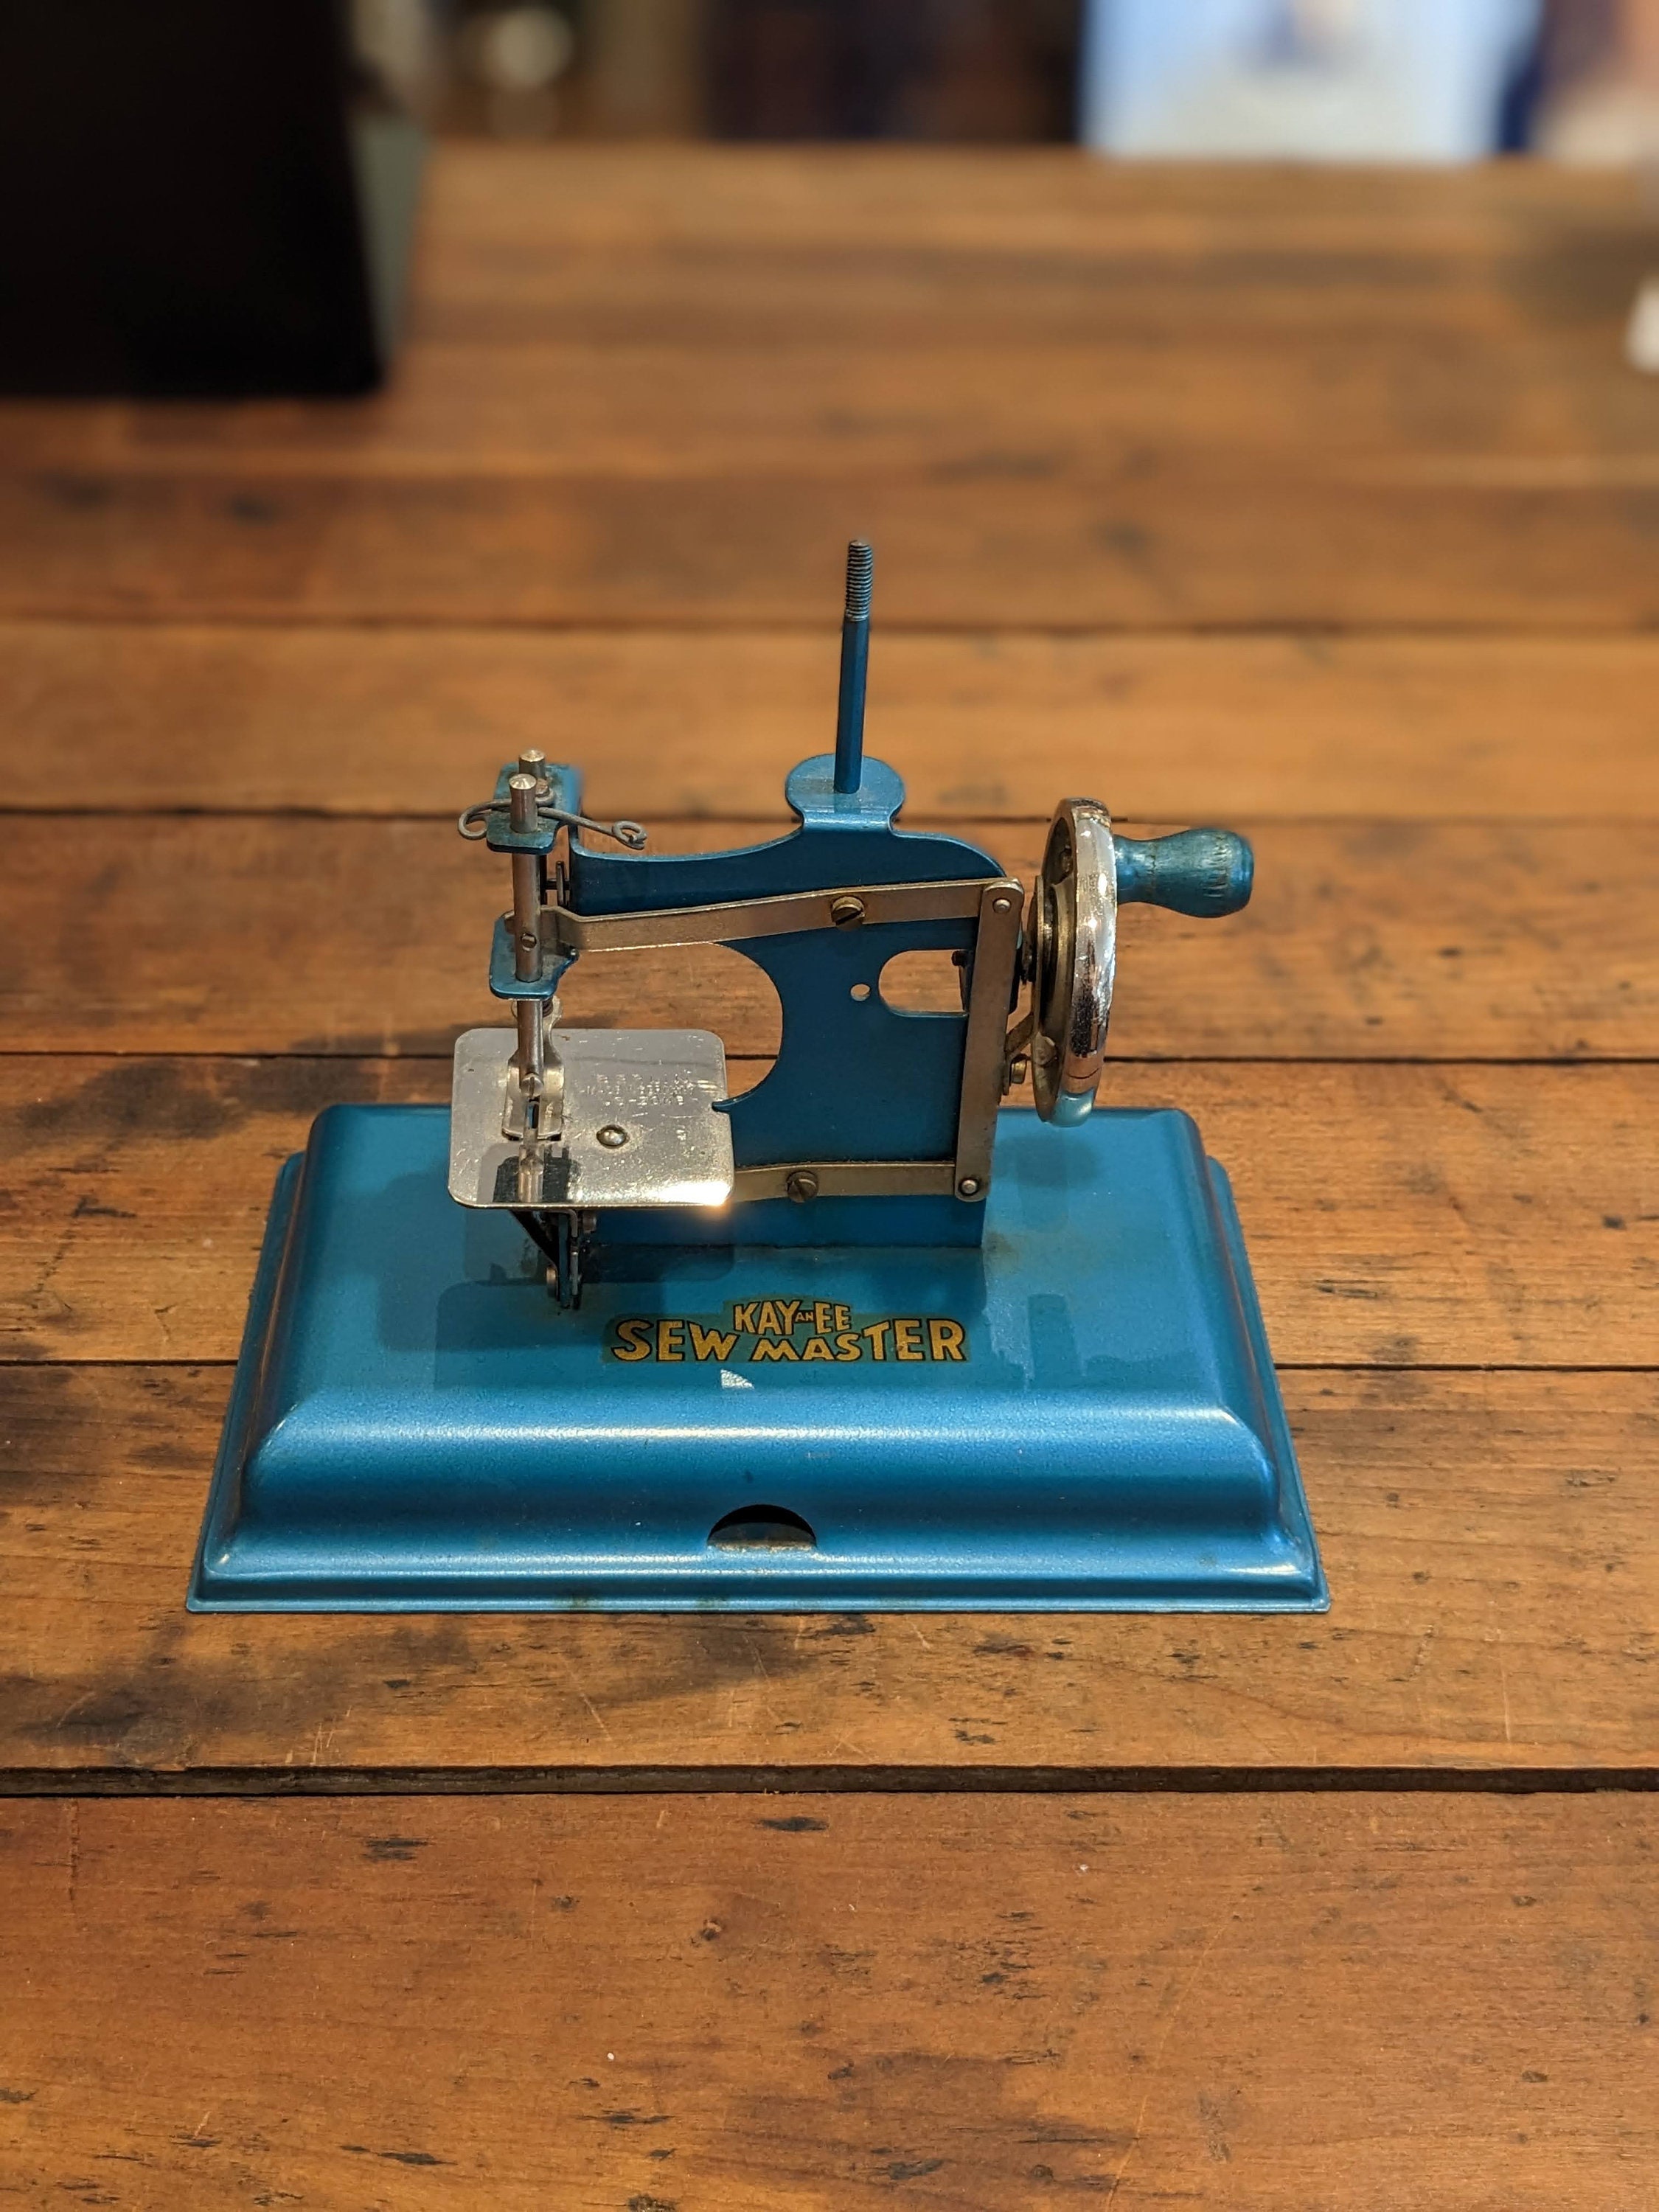 KAYanEE Sew Master Vintage Toy Sewing Machine, pink by Jill